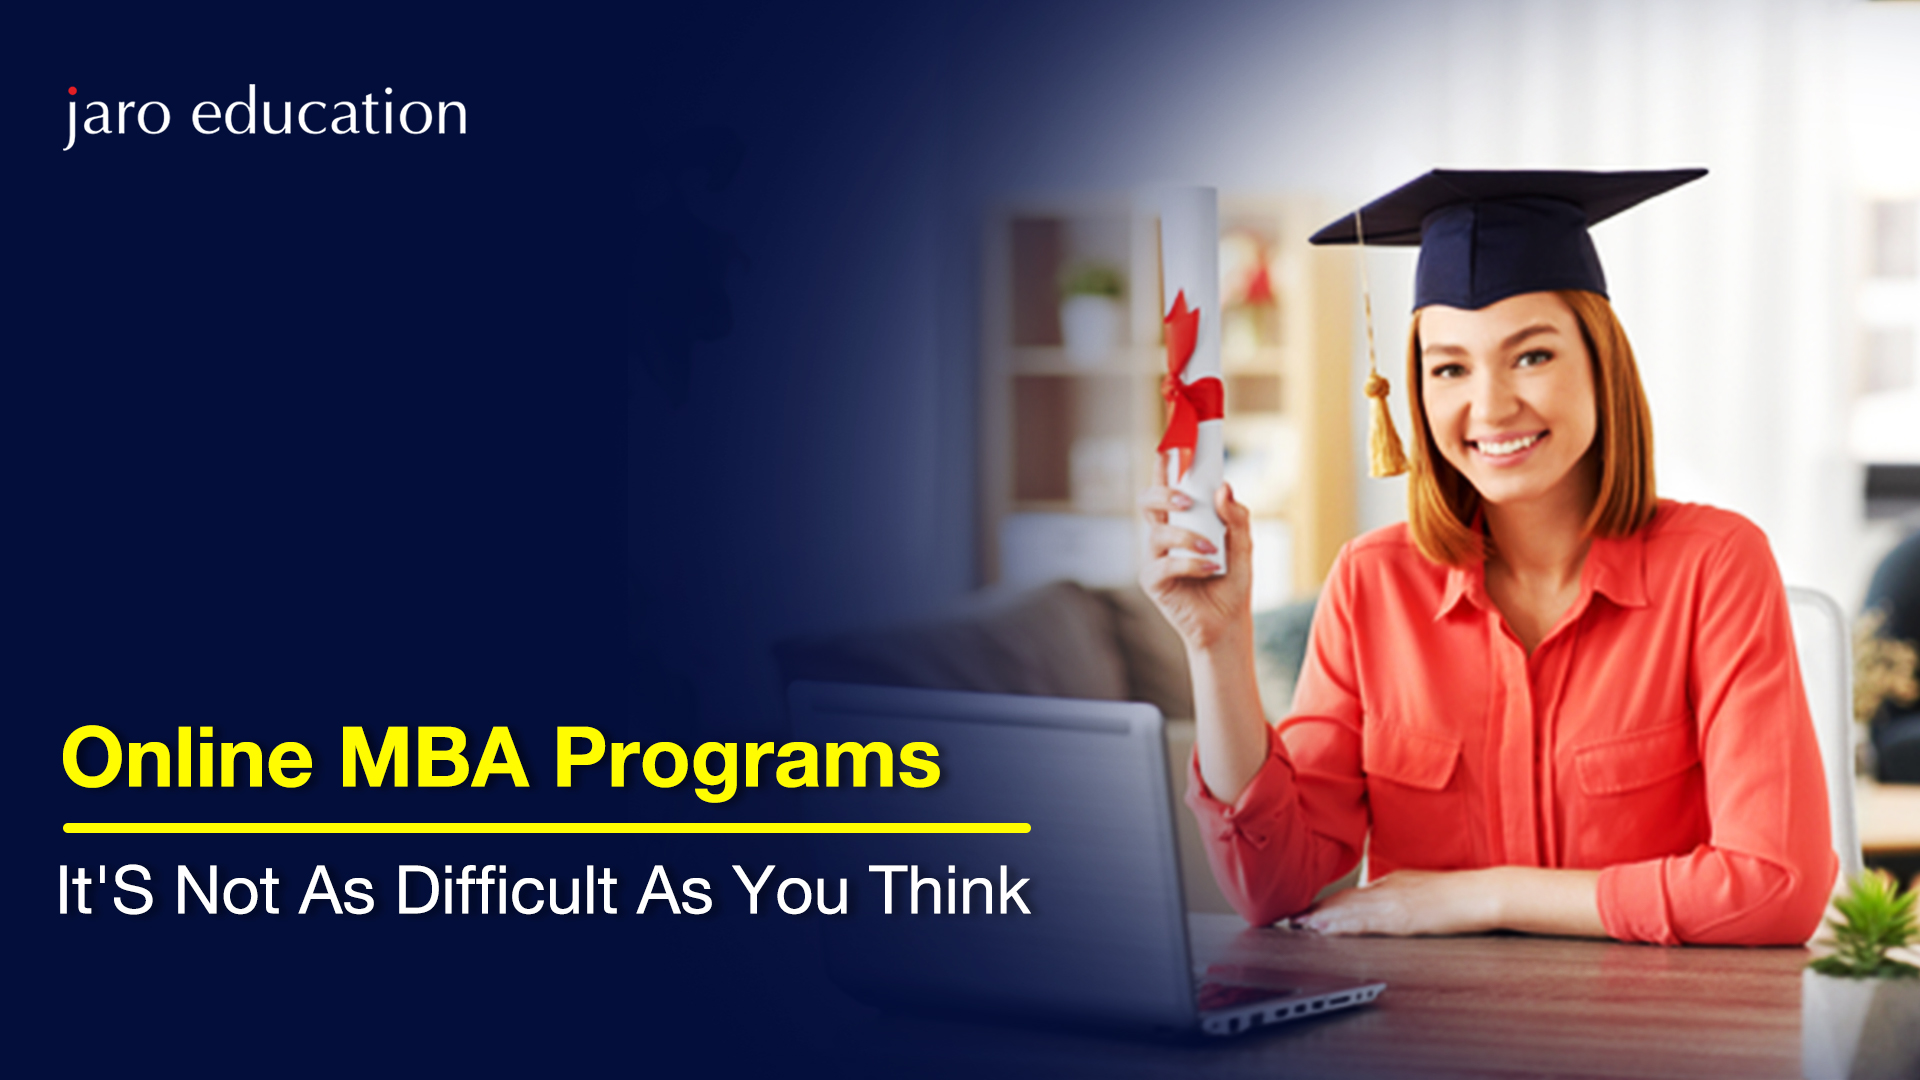 Online MBA Programs for international students: BusinessHAB.com